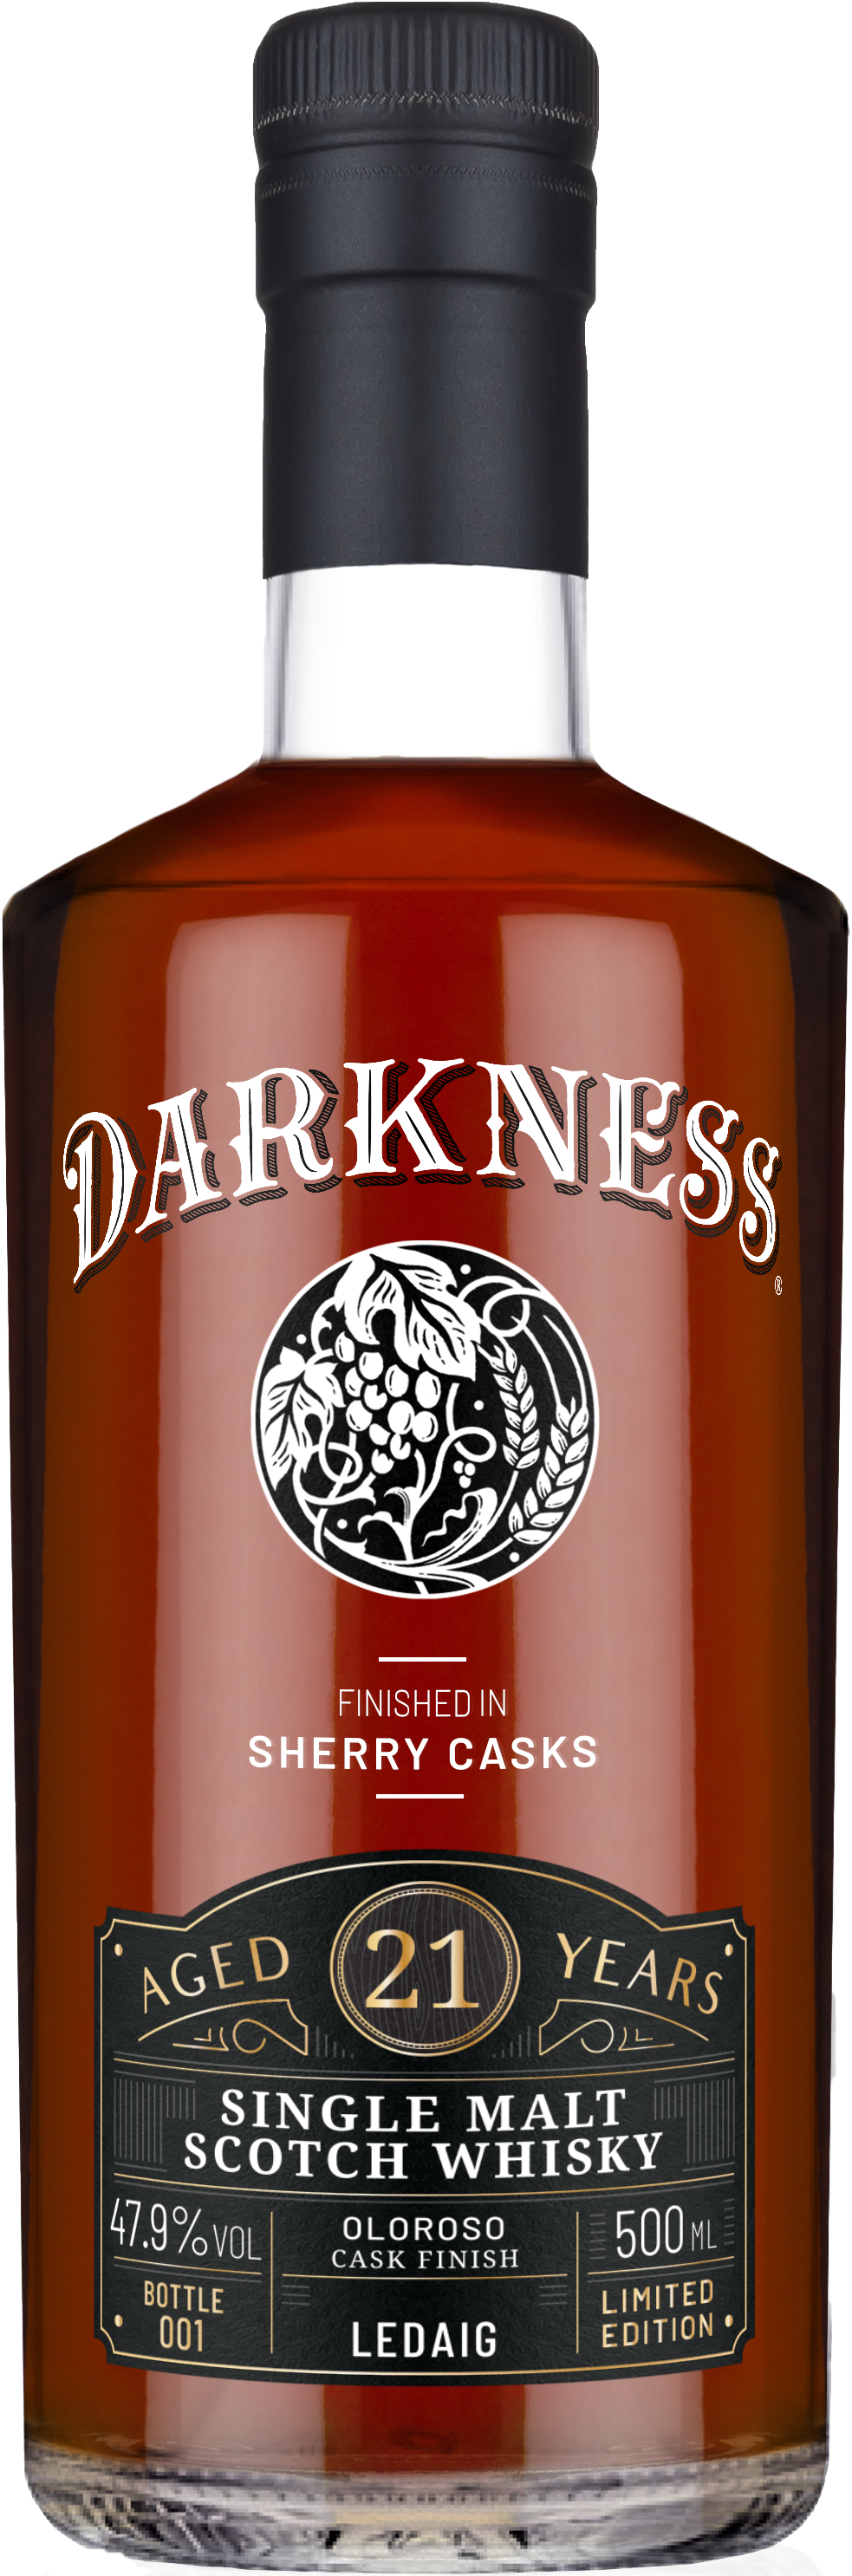 The Darkness Ledaig 21 Year Oloroso Single Malt Scotch Whisky 500ml